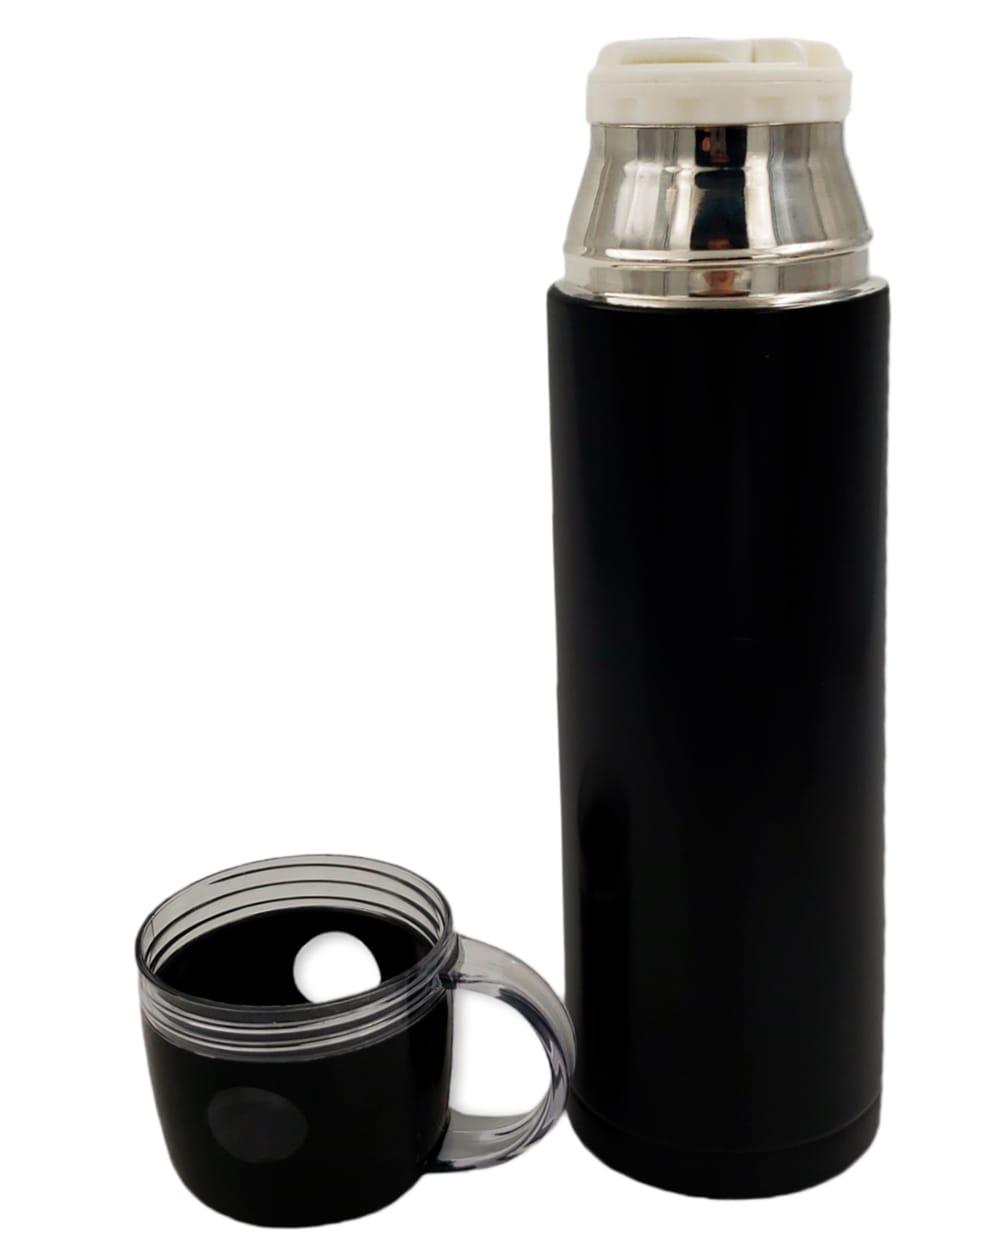 https://donbodegon.com/storage/products/1681410559termo-acero-inoxidable-500-ml-para-cafe-con-vaso-negro1-1.jpg